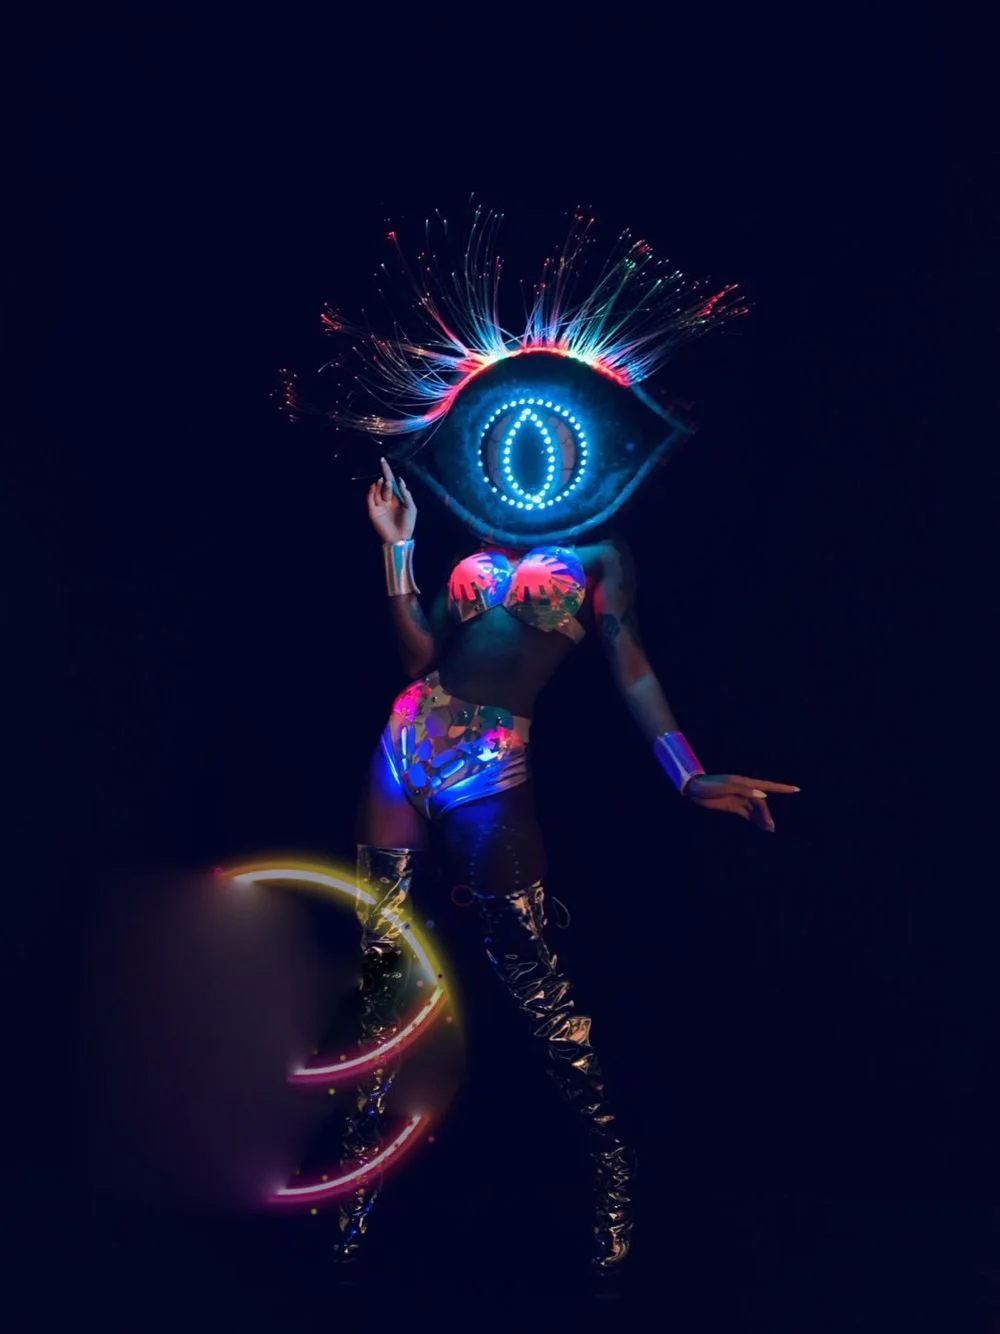 Light up monster eye future show stage costume Lumious led eyeball headgear dance costume